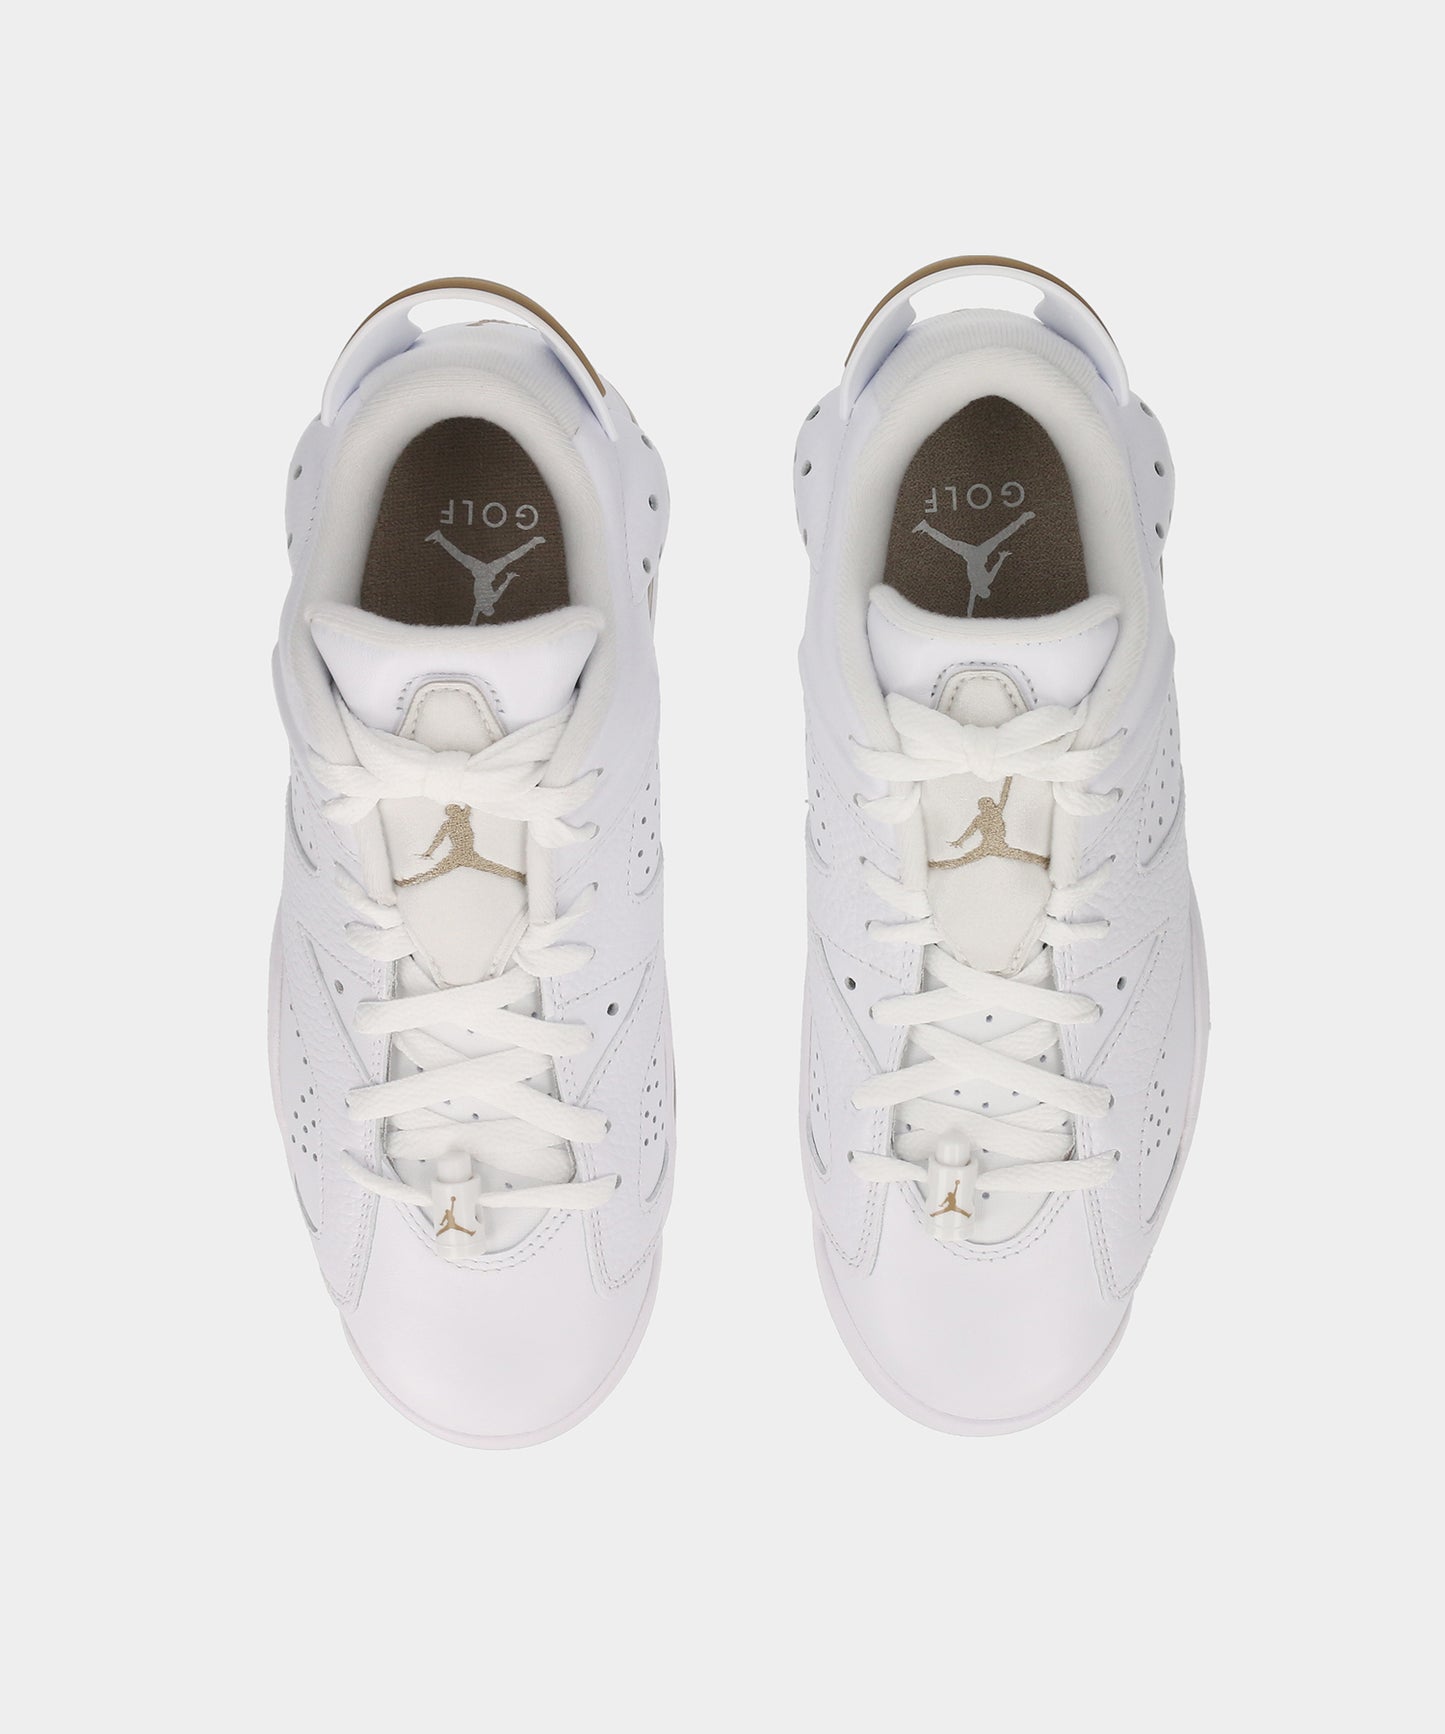 Nike Air Jordan 6 Low Golf White Khaki